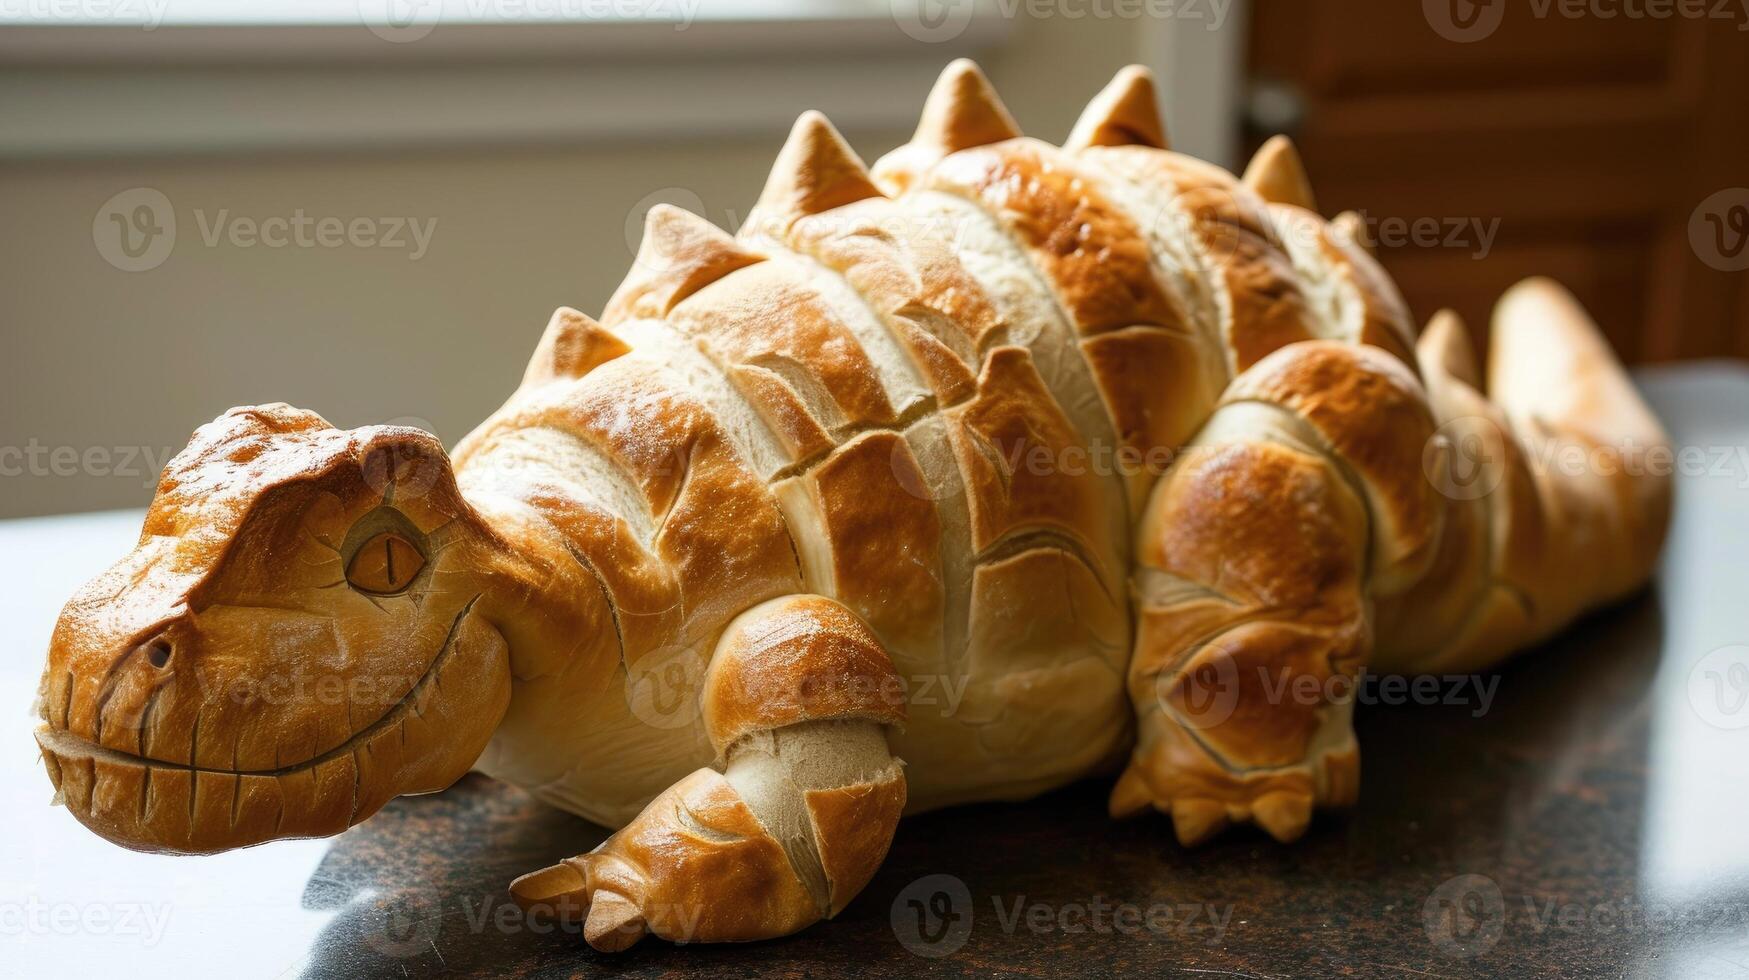 ai generado único un pan pan parecido a un dinosaurio descansando en un de madera mesa, ai generado foto